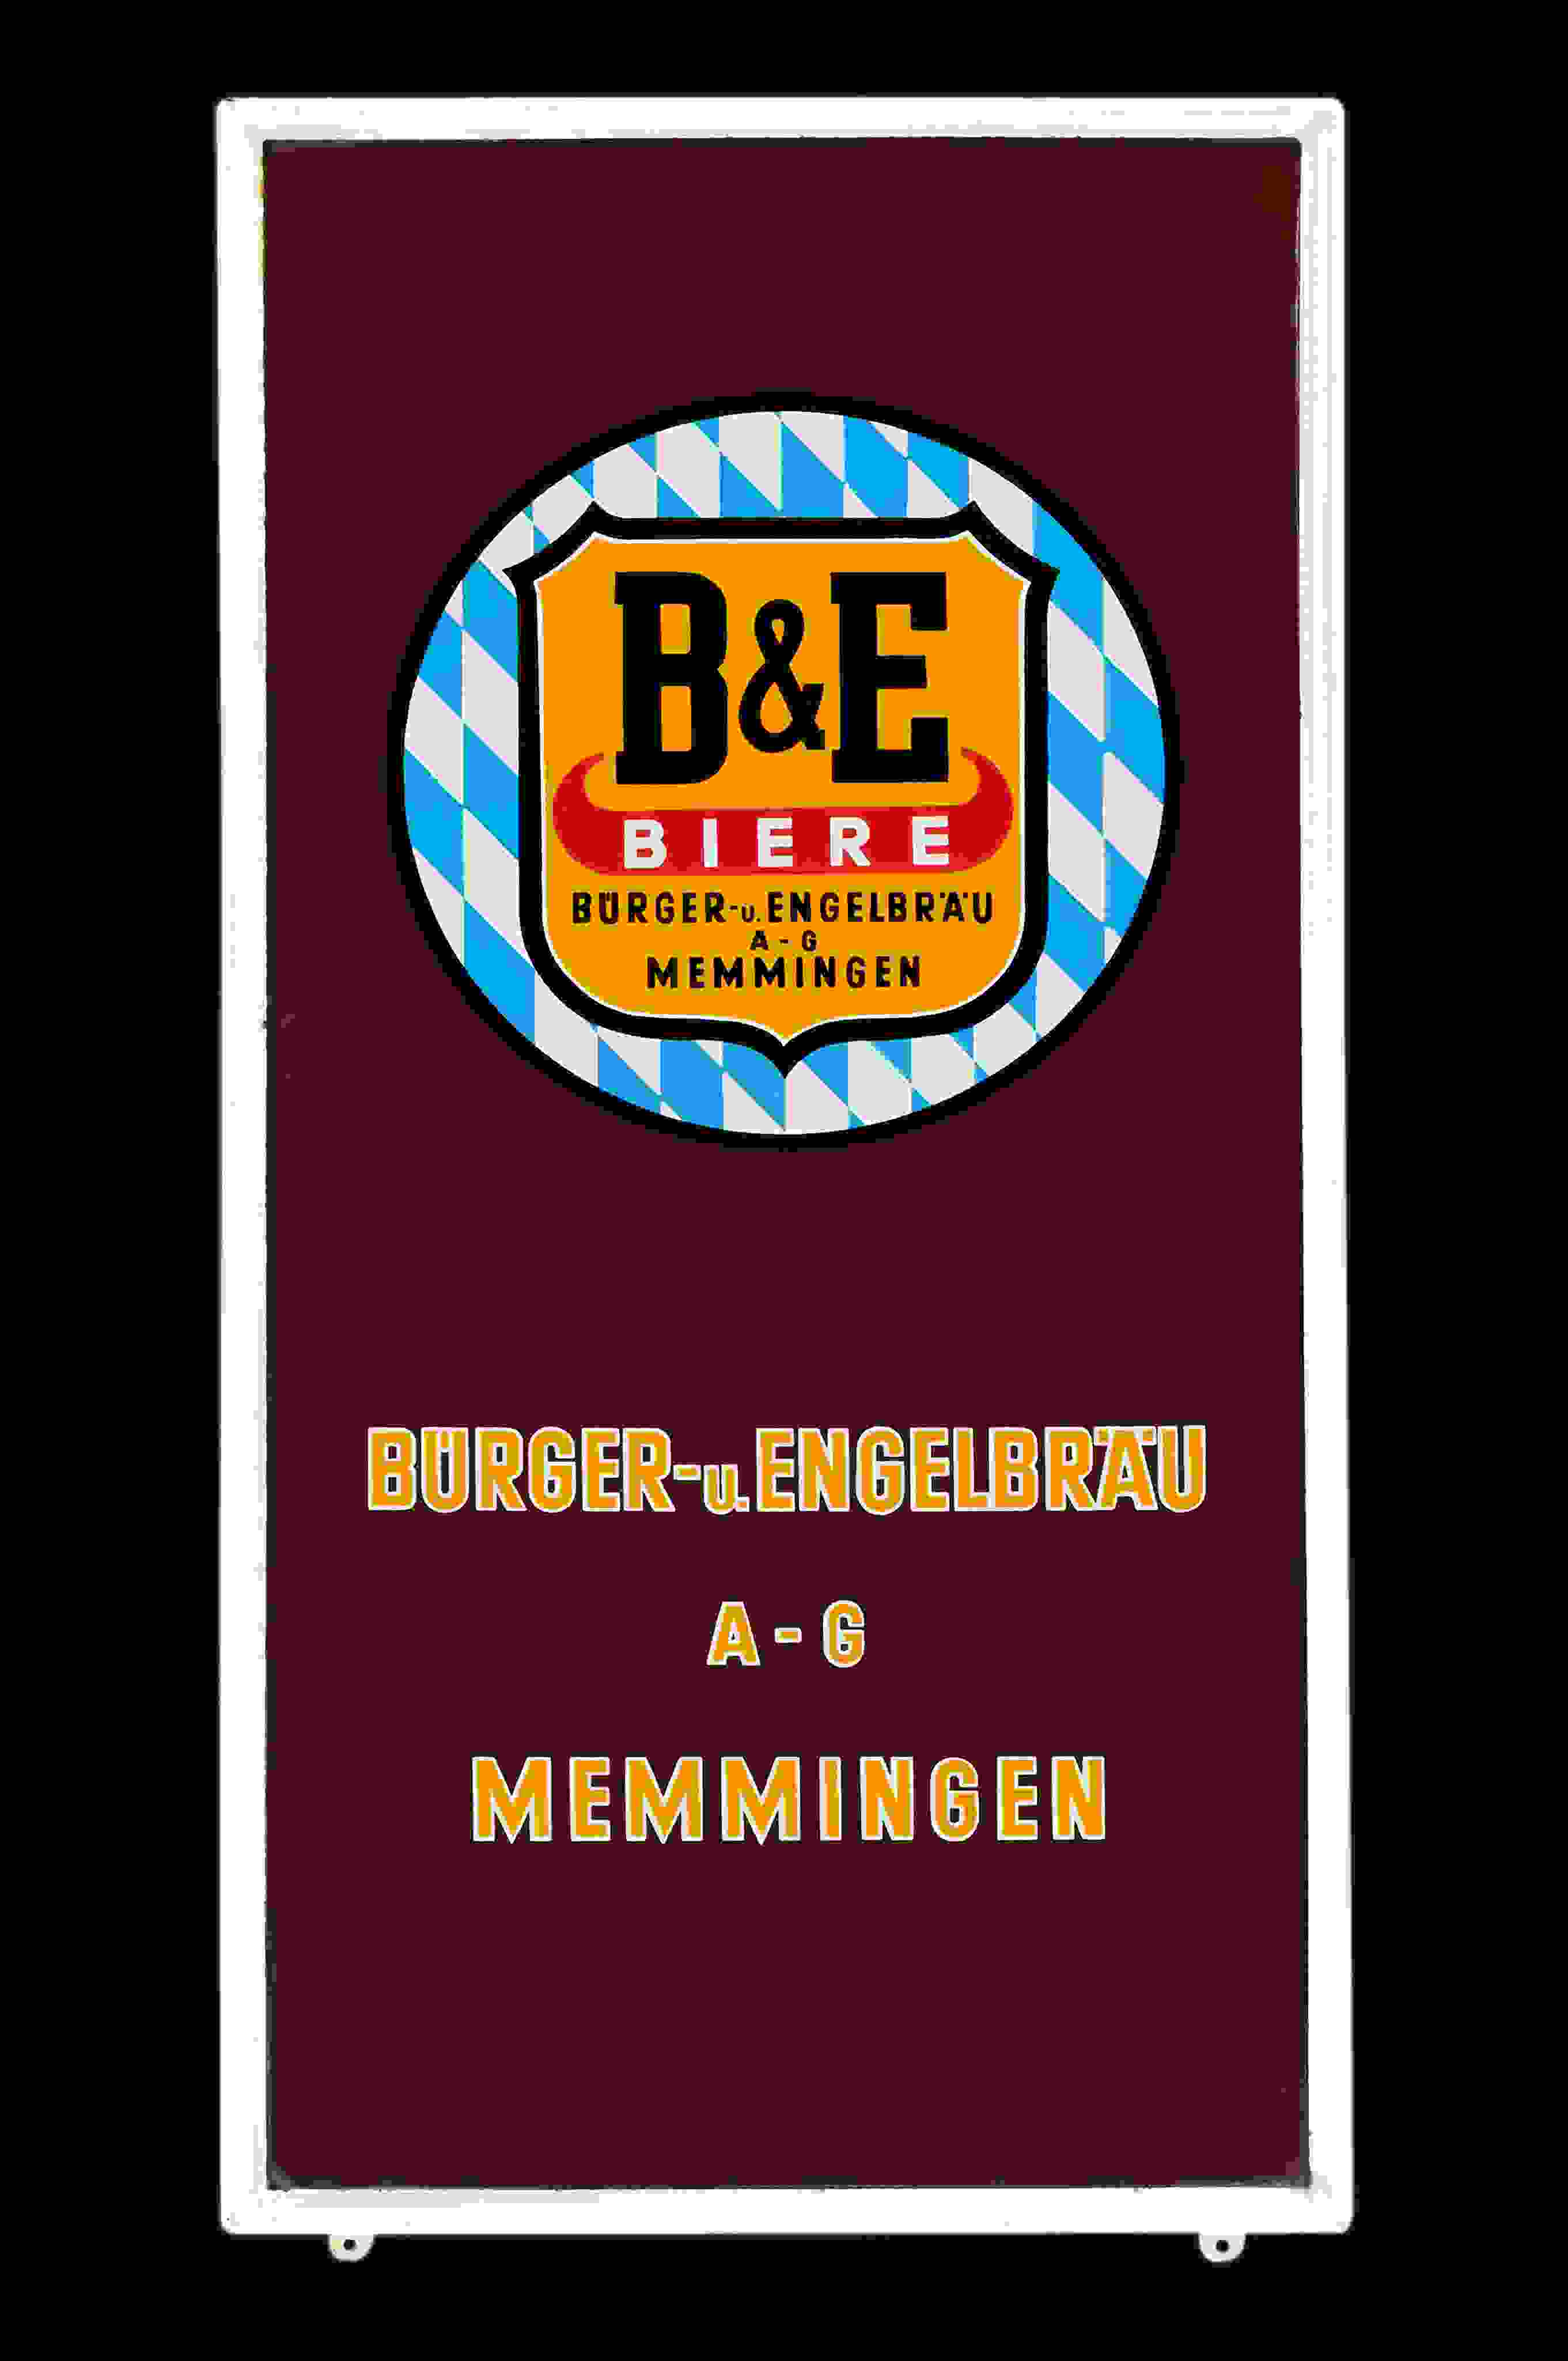 Bürger-u. Engelbräu Biere  